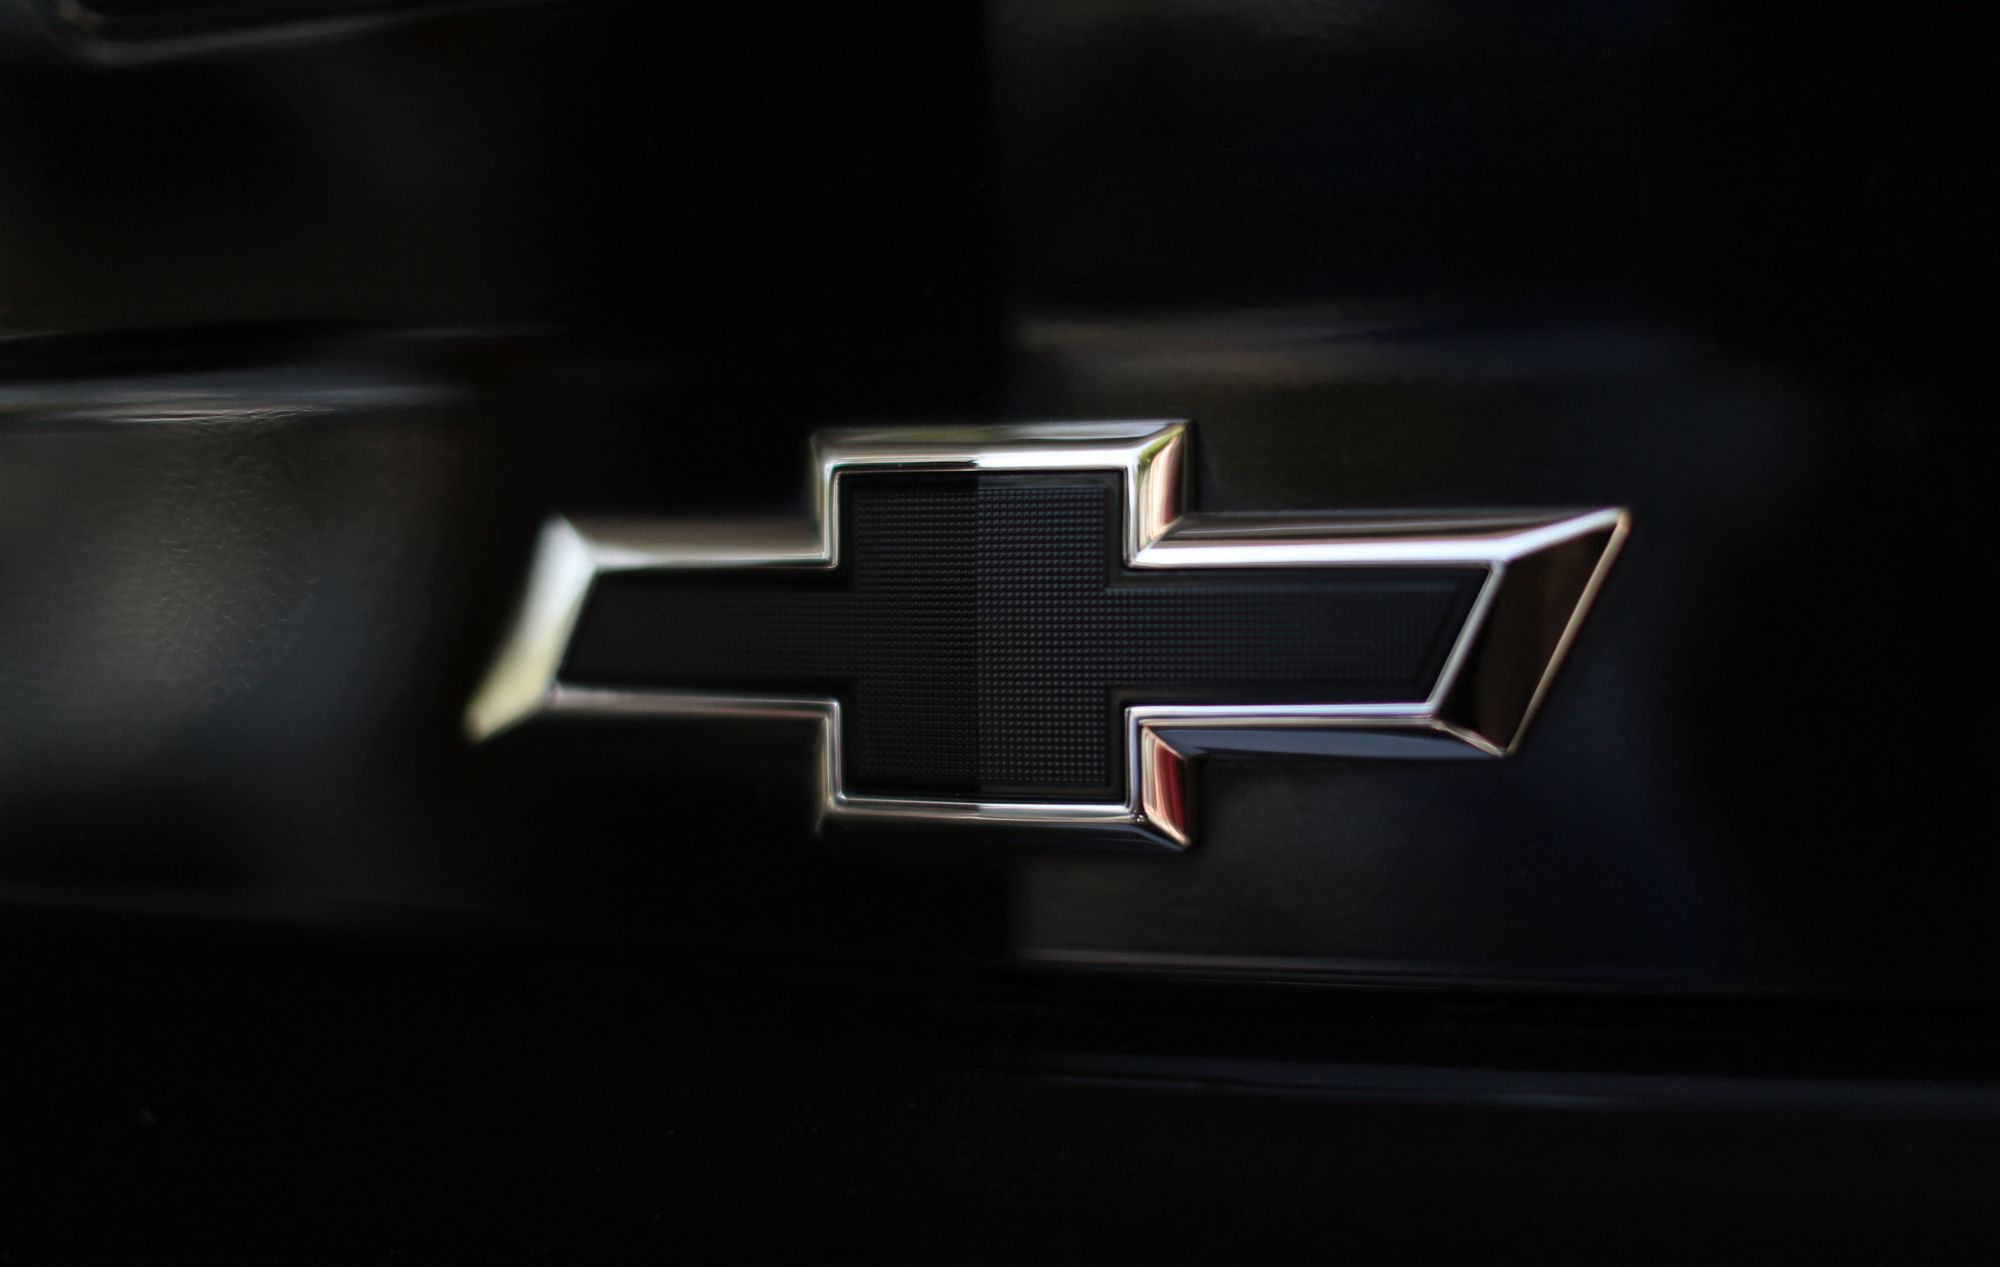 Logotipo de Chevy negro